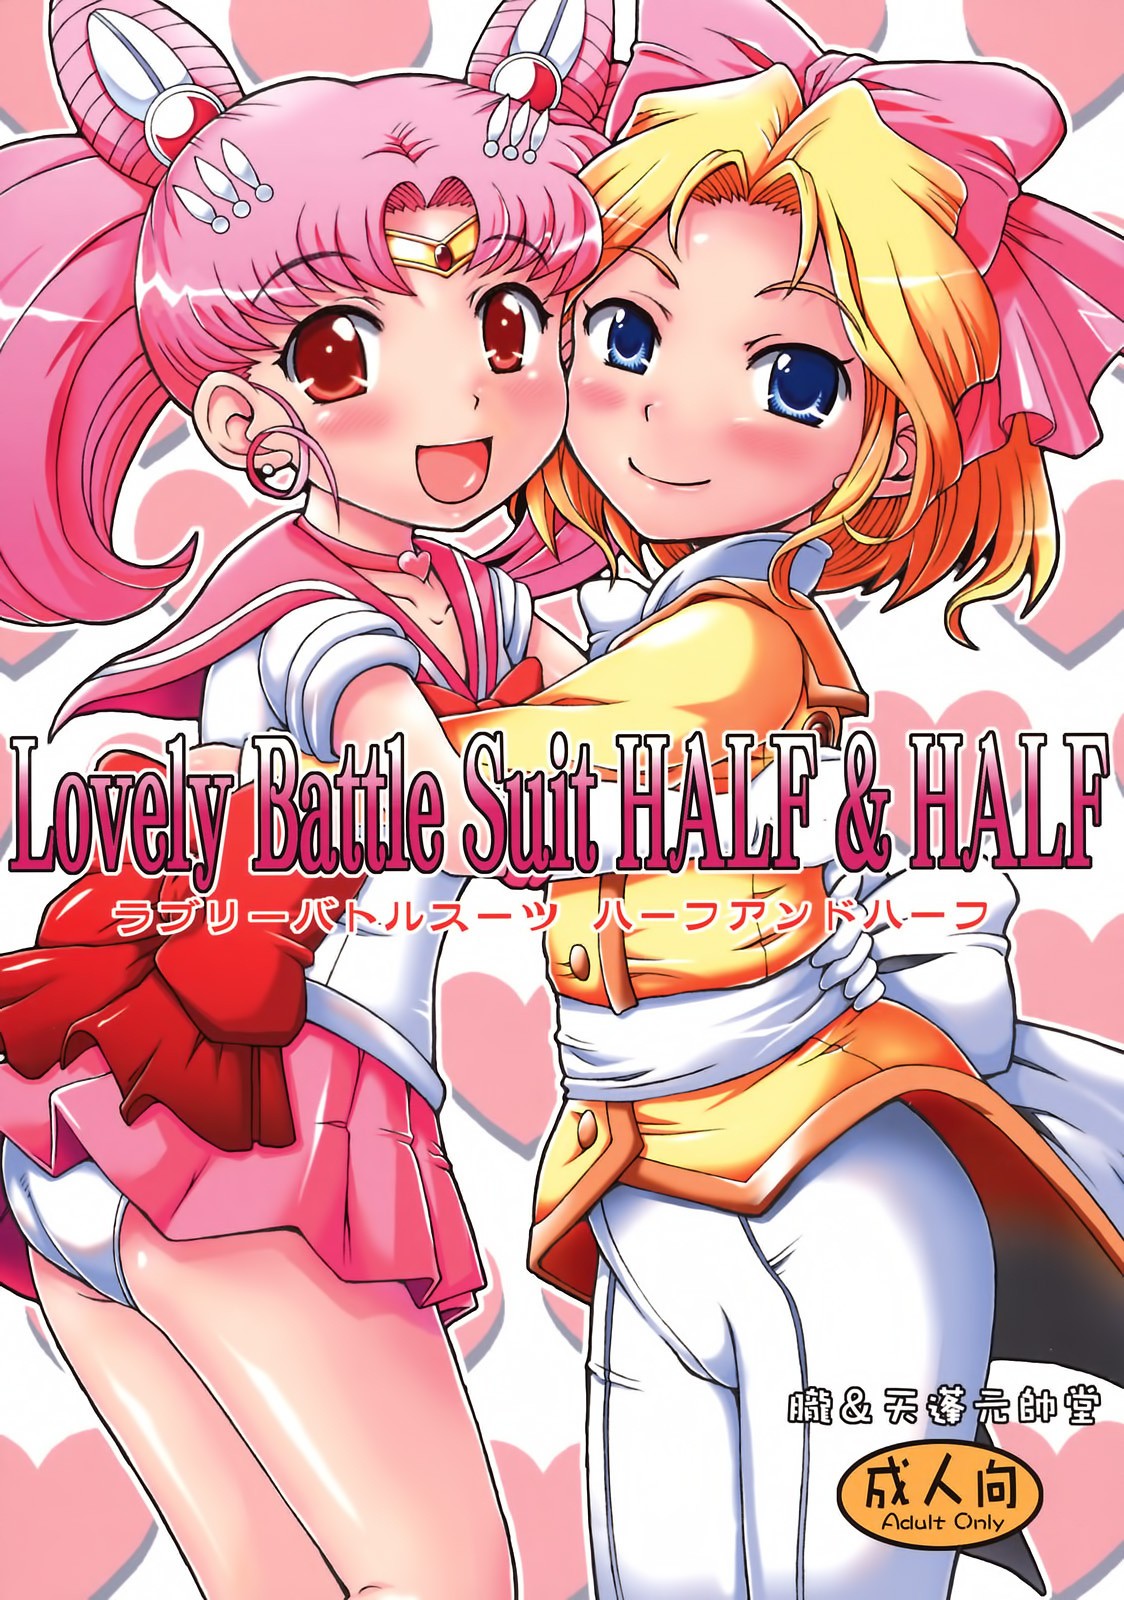 Lovely Battle Suit HALF & HALF hentai manga picture 1